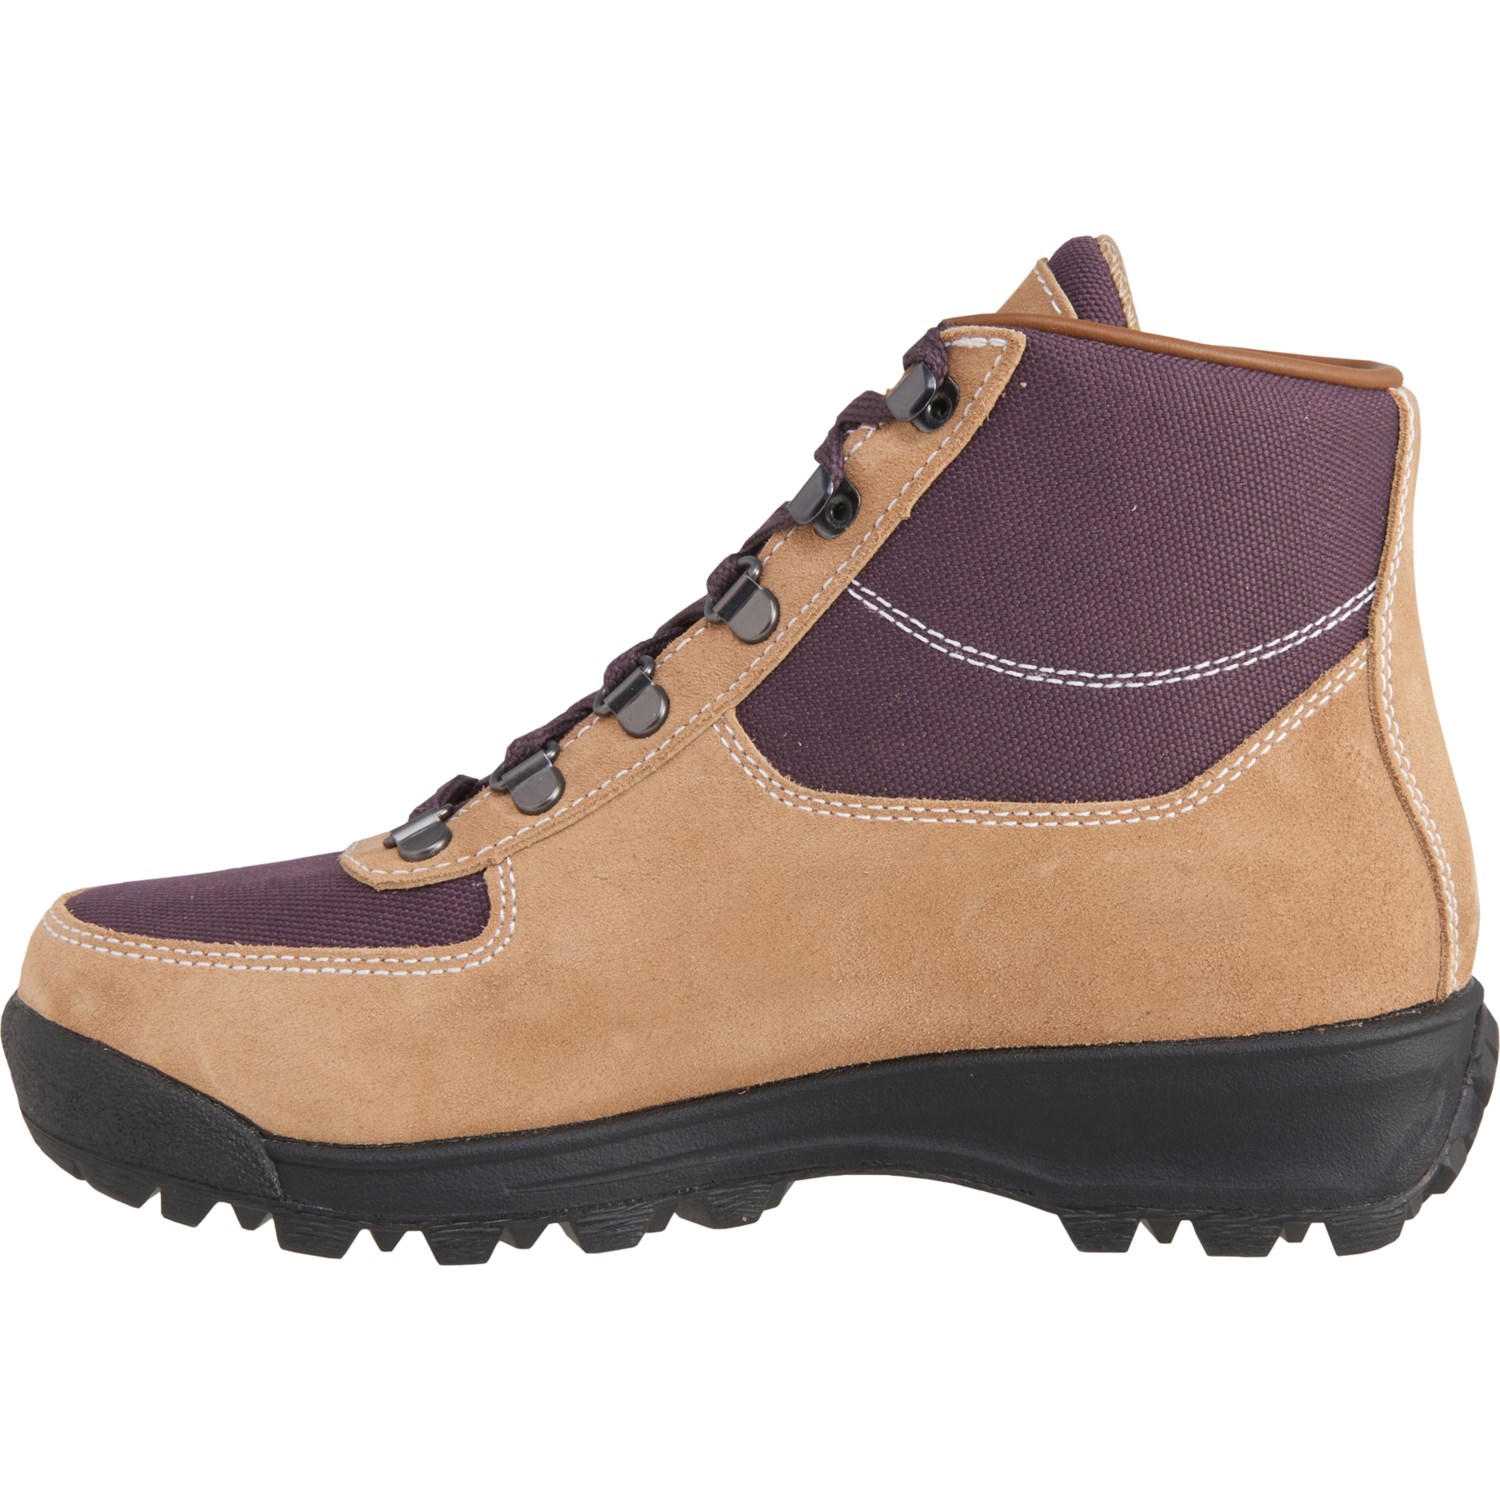 Vasque Skywalk Gore-Tex® Hiking Boots (For Women) - Save 53%